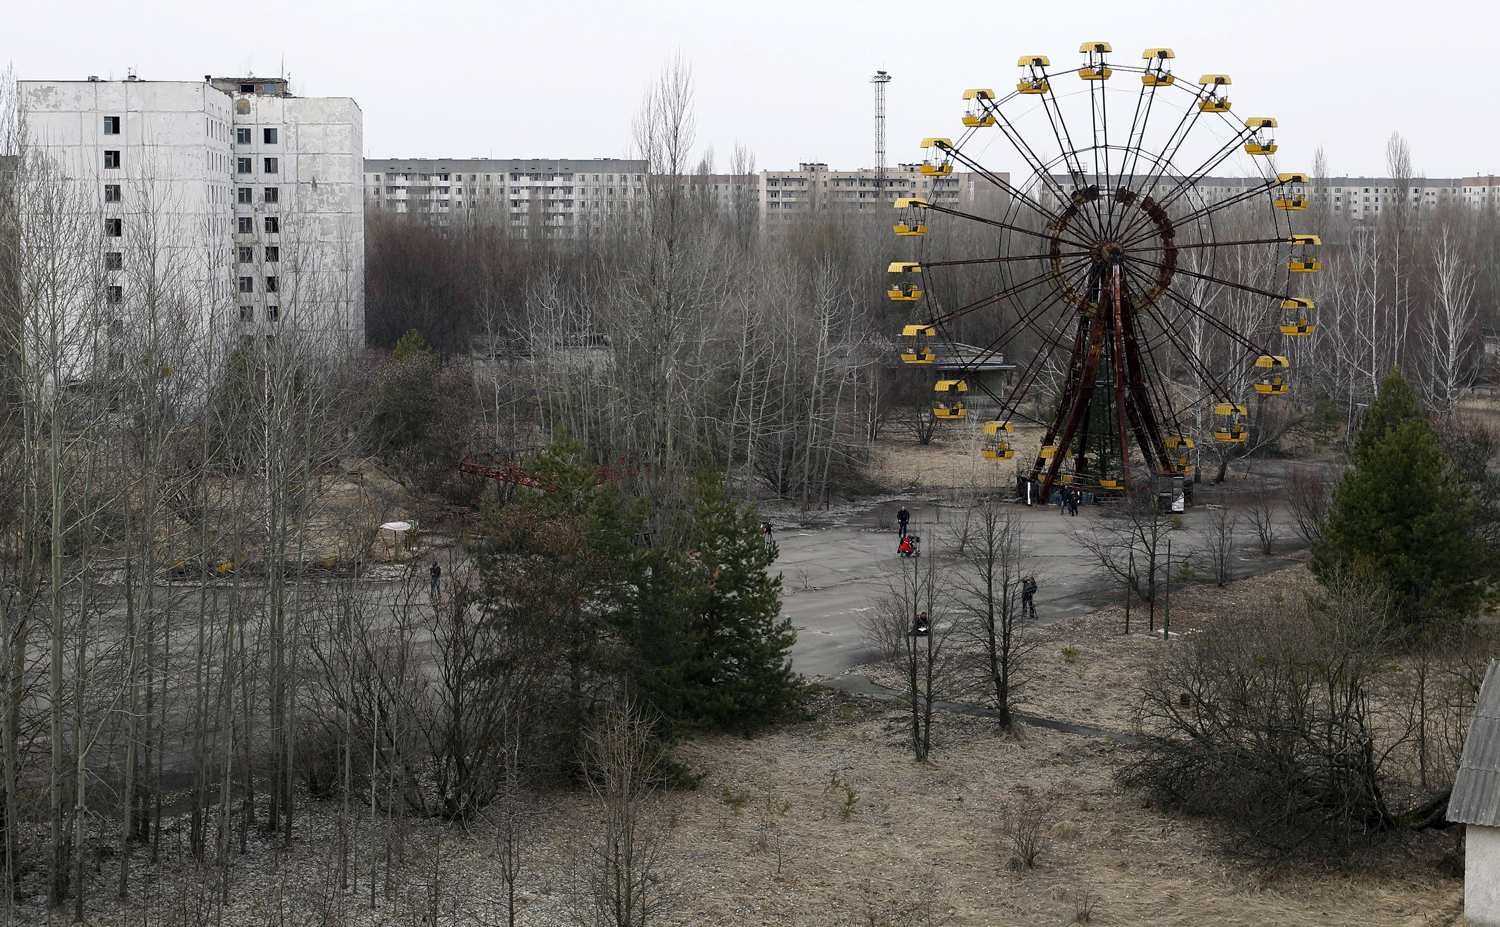 http://dineroclub.net/wp-content/uploads/2015/08/chernobyl.jpg